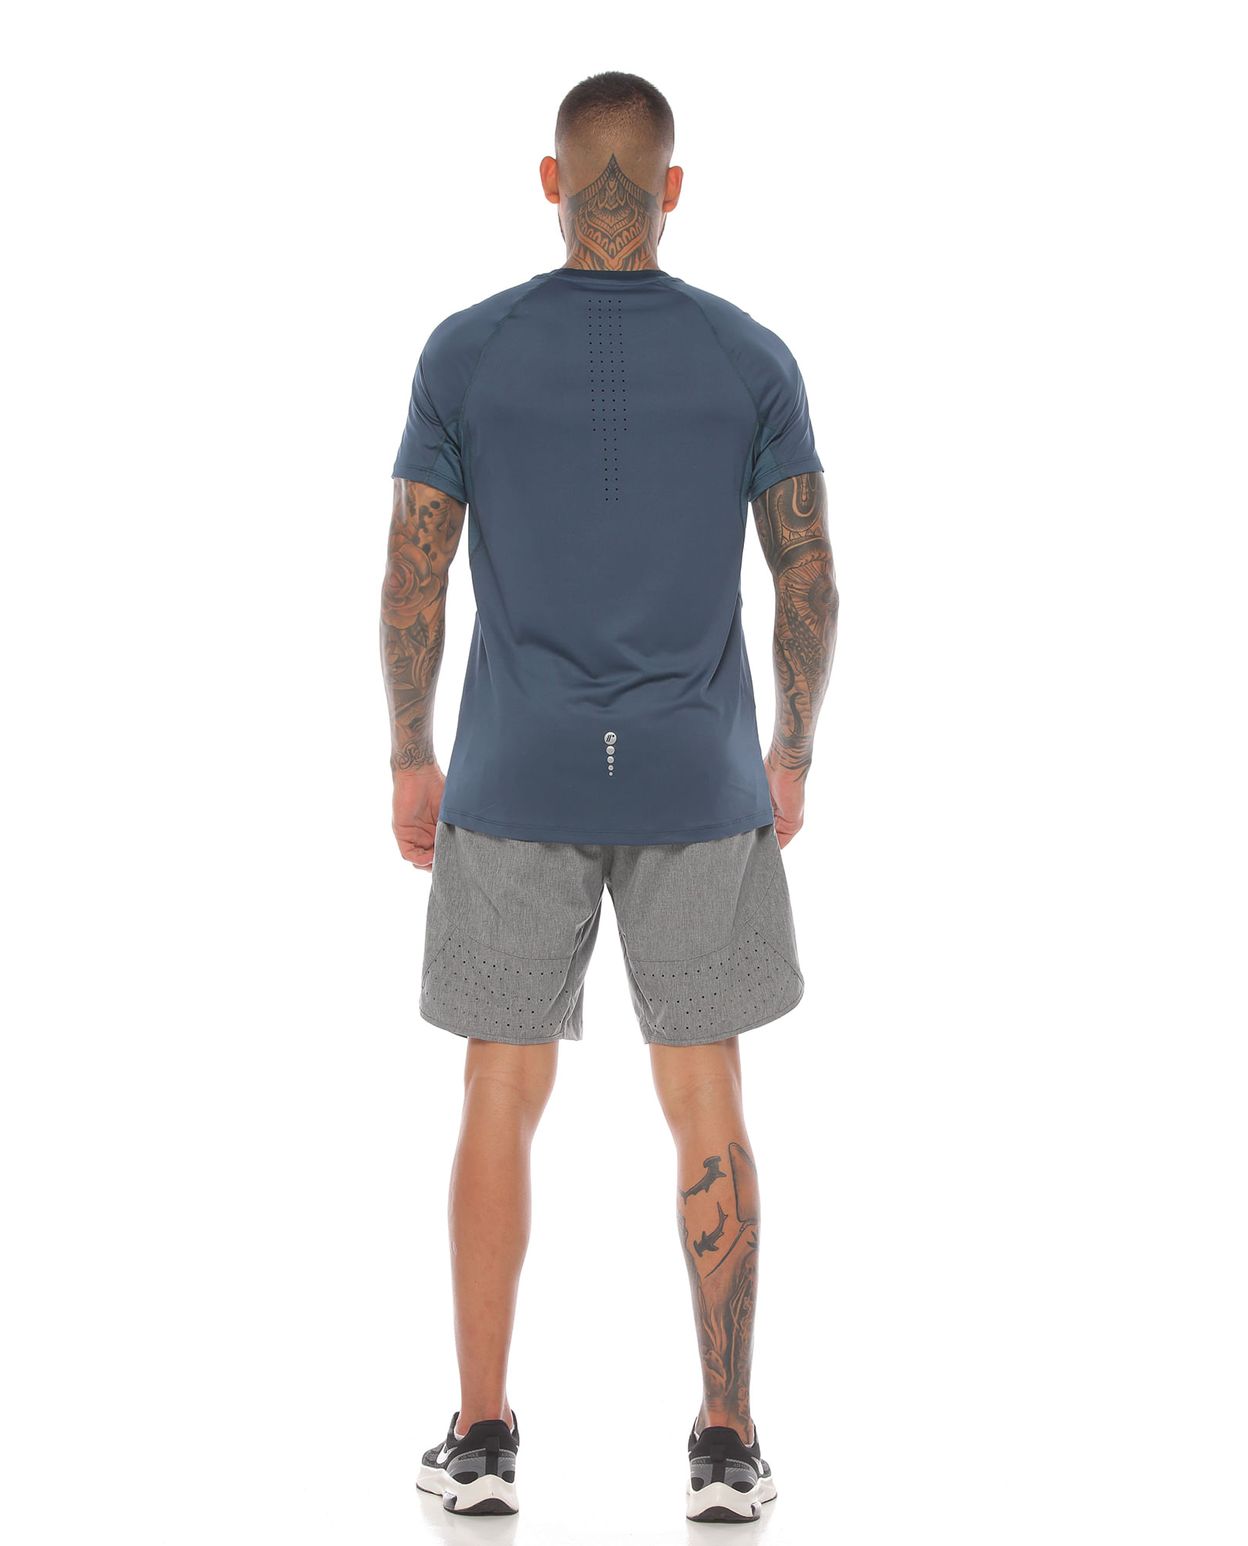 modelo con camiseta deportiva color azul petroleo y pantaloneta gris para hombre cuerpo completo parte trasera